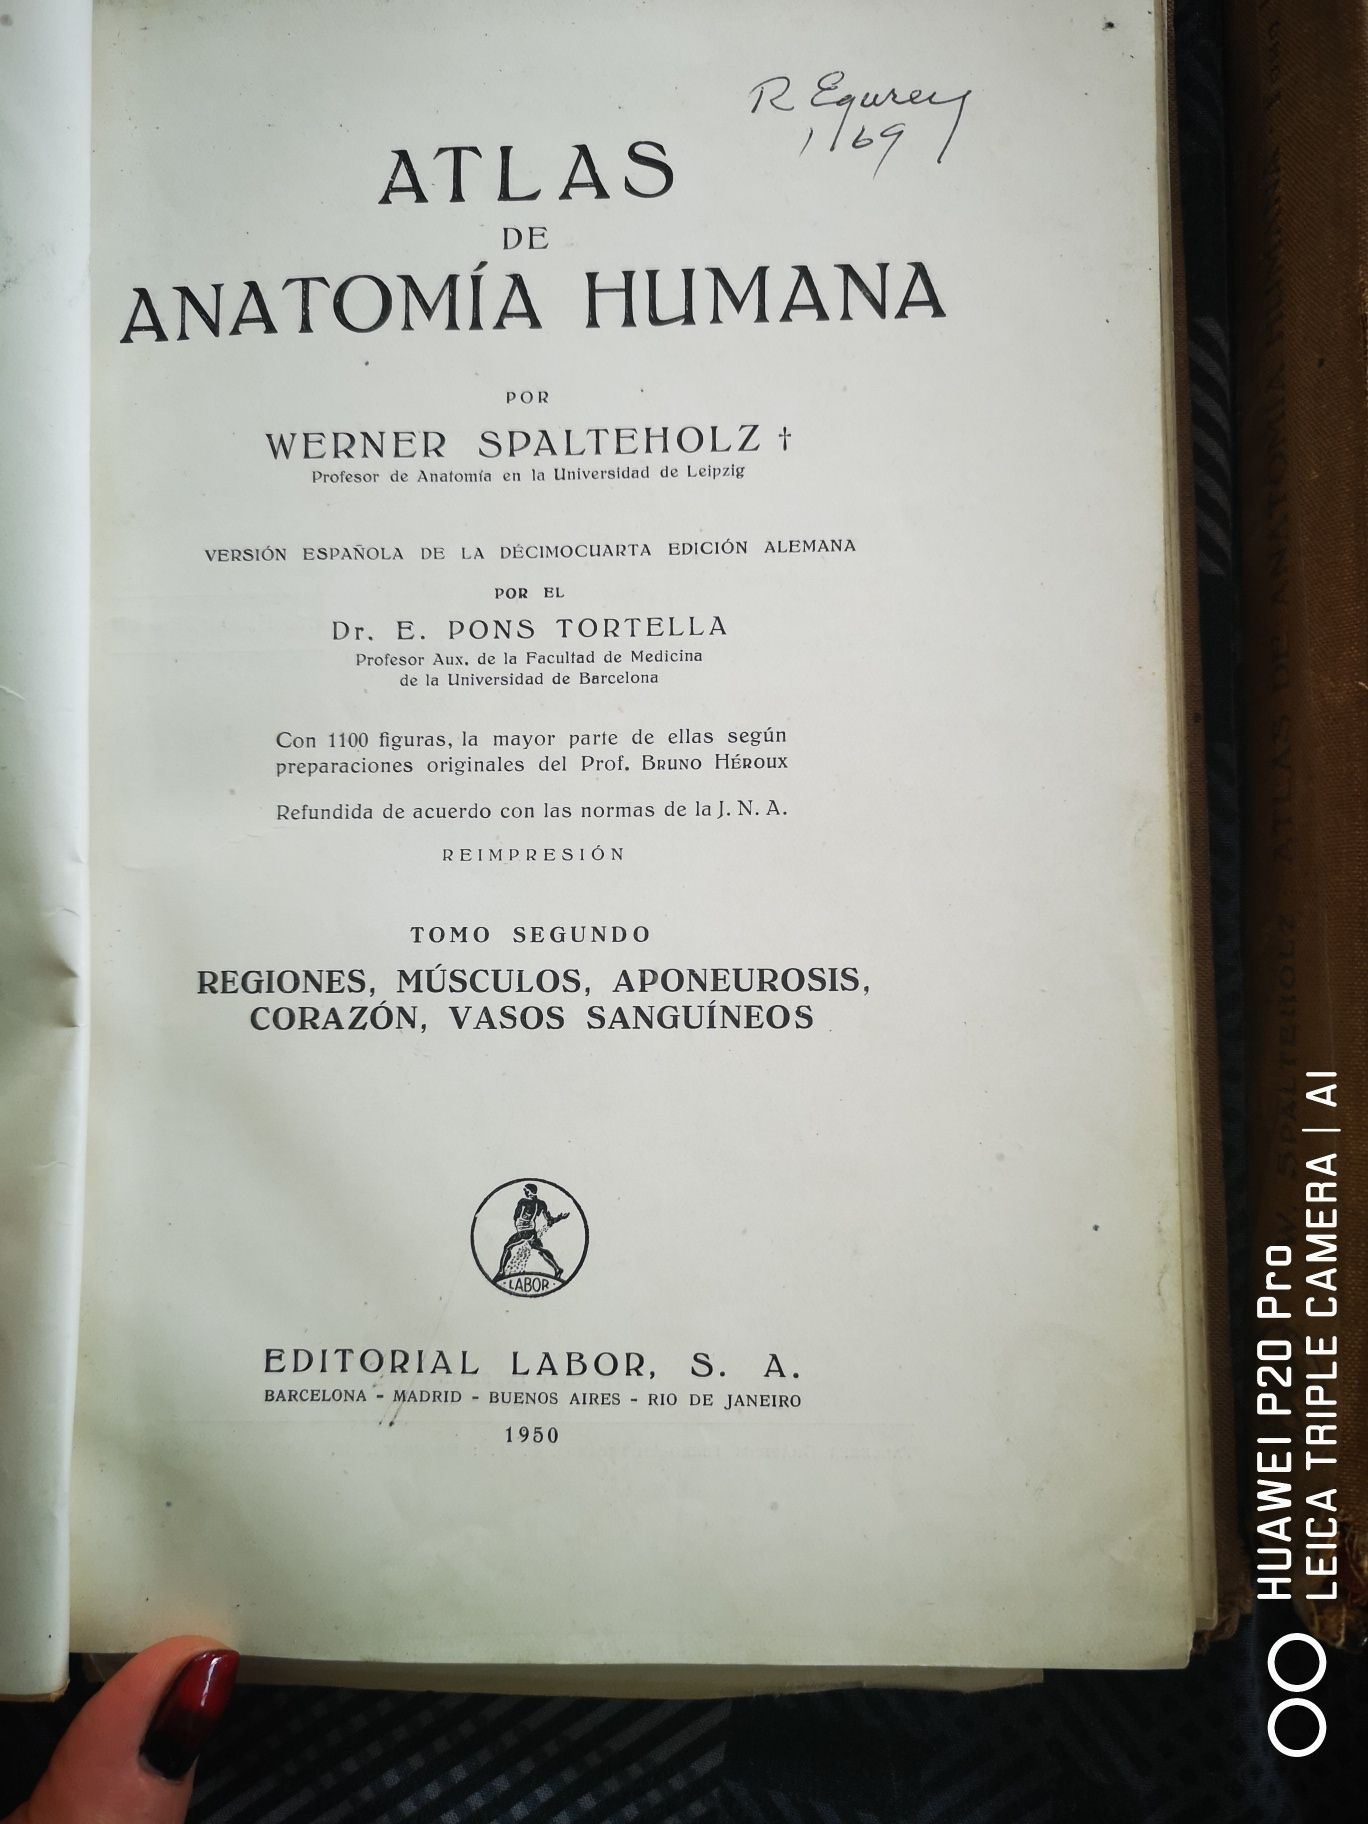 Учебник Esperantologio, физиология и атласи по анатомия на испански